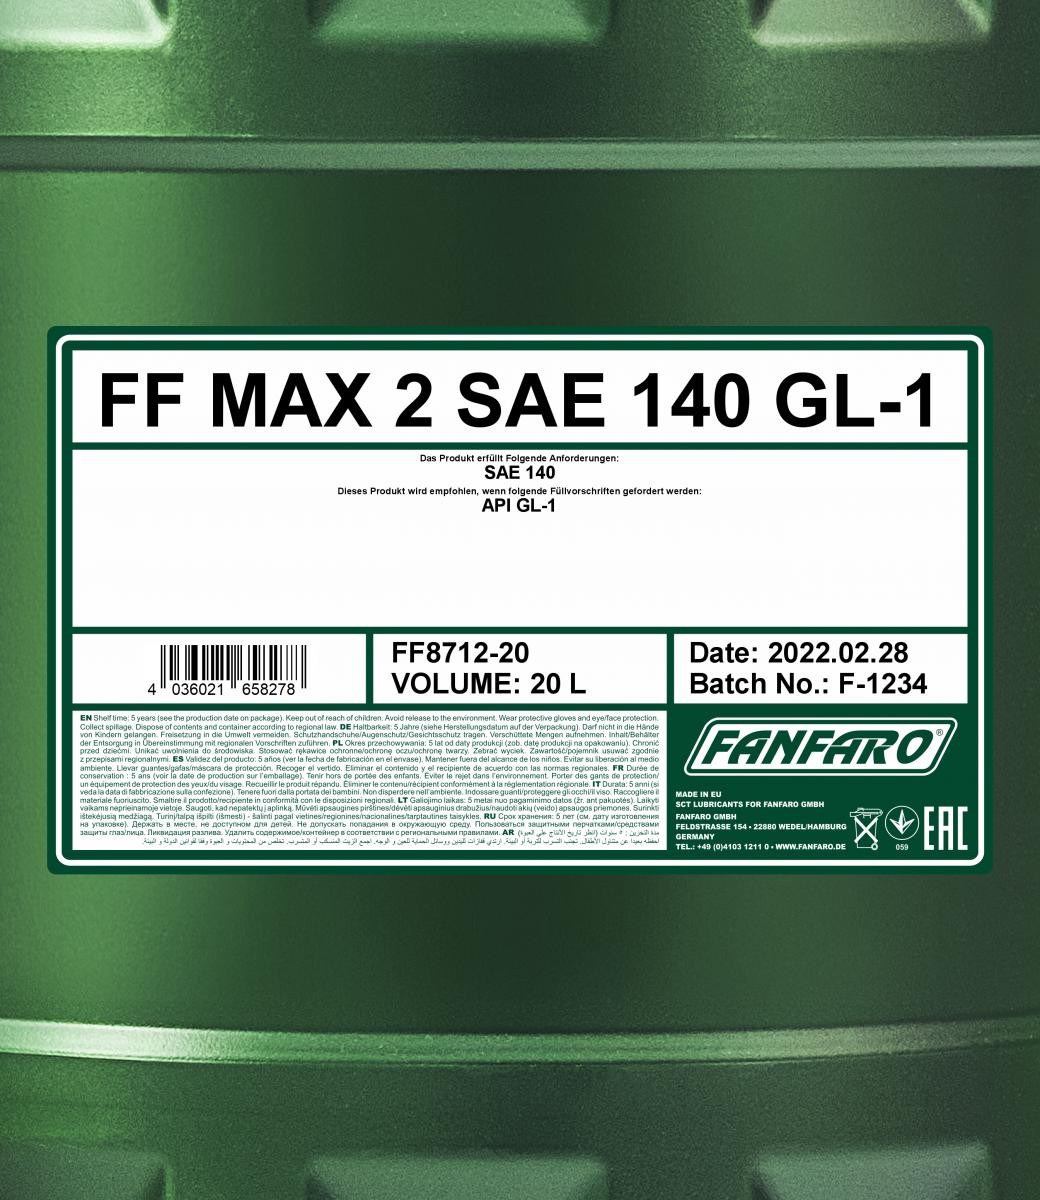 FANFARO Transmission oil FF8712-20